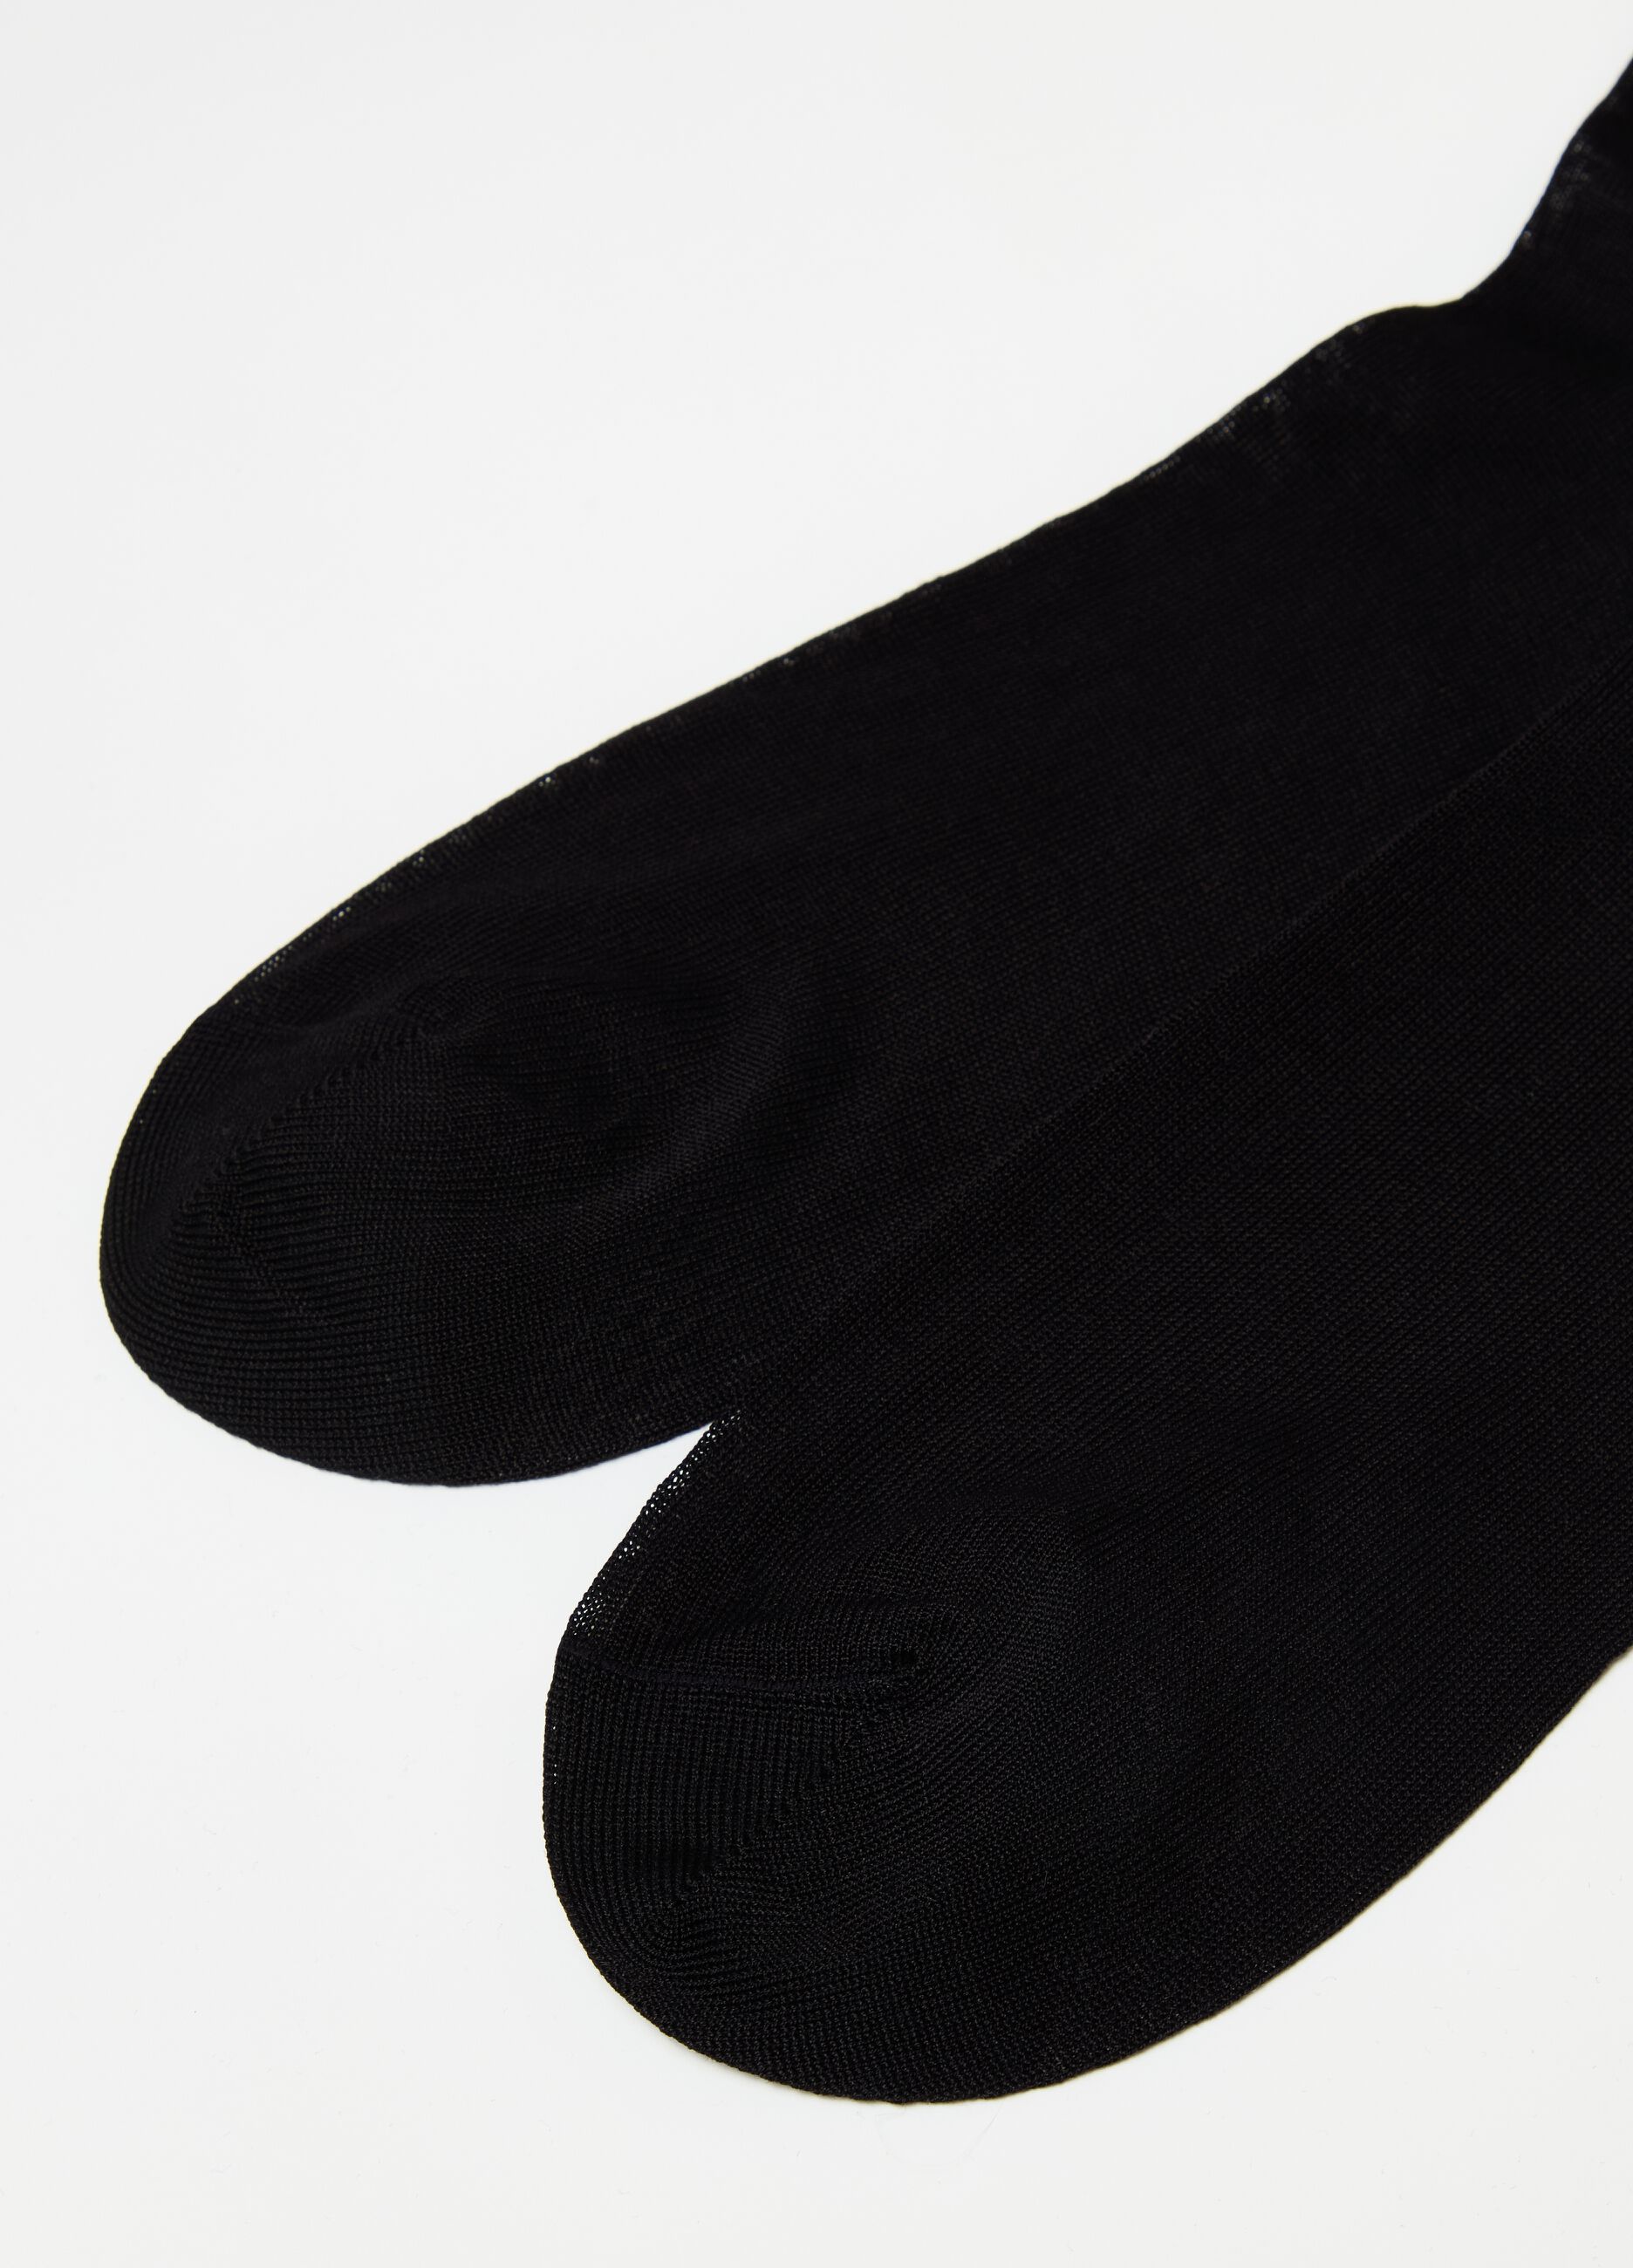 Three-pair pack short socks in plain-knit cotton